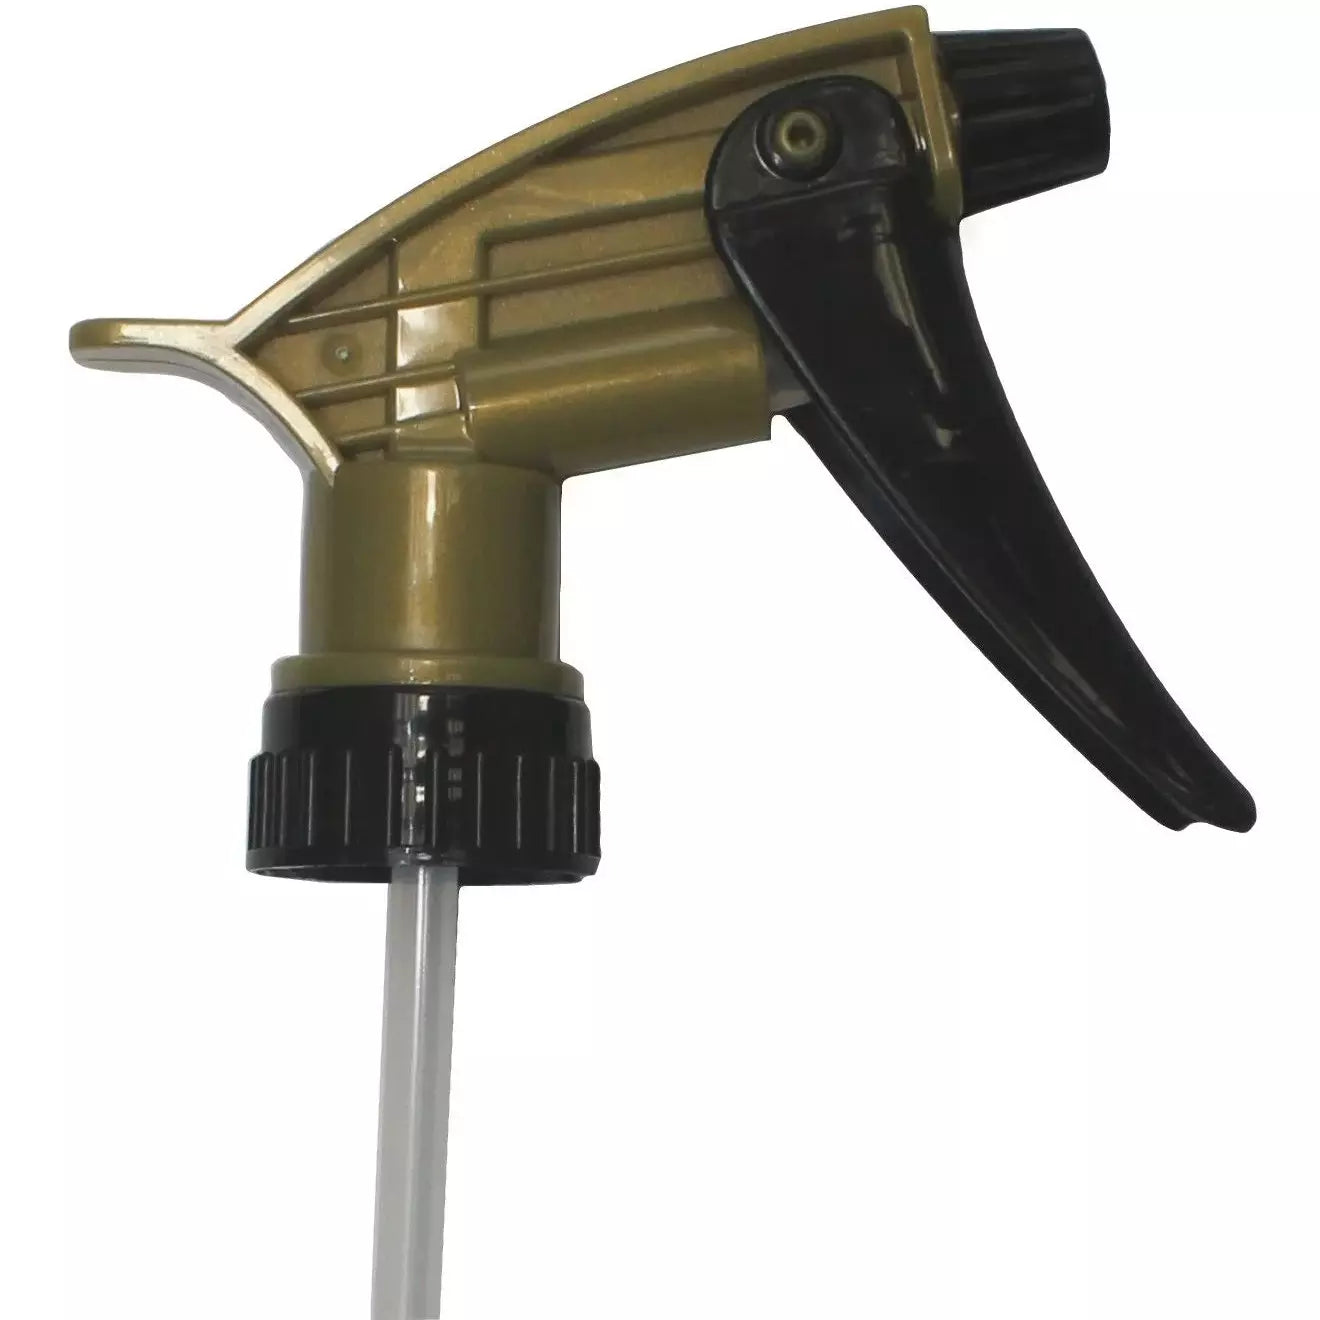 XCP FL-320ARS CAR Products Hi-Tech Acid Resistant Trigger Sprayer (Gold)